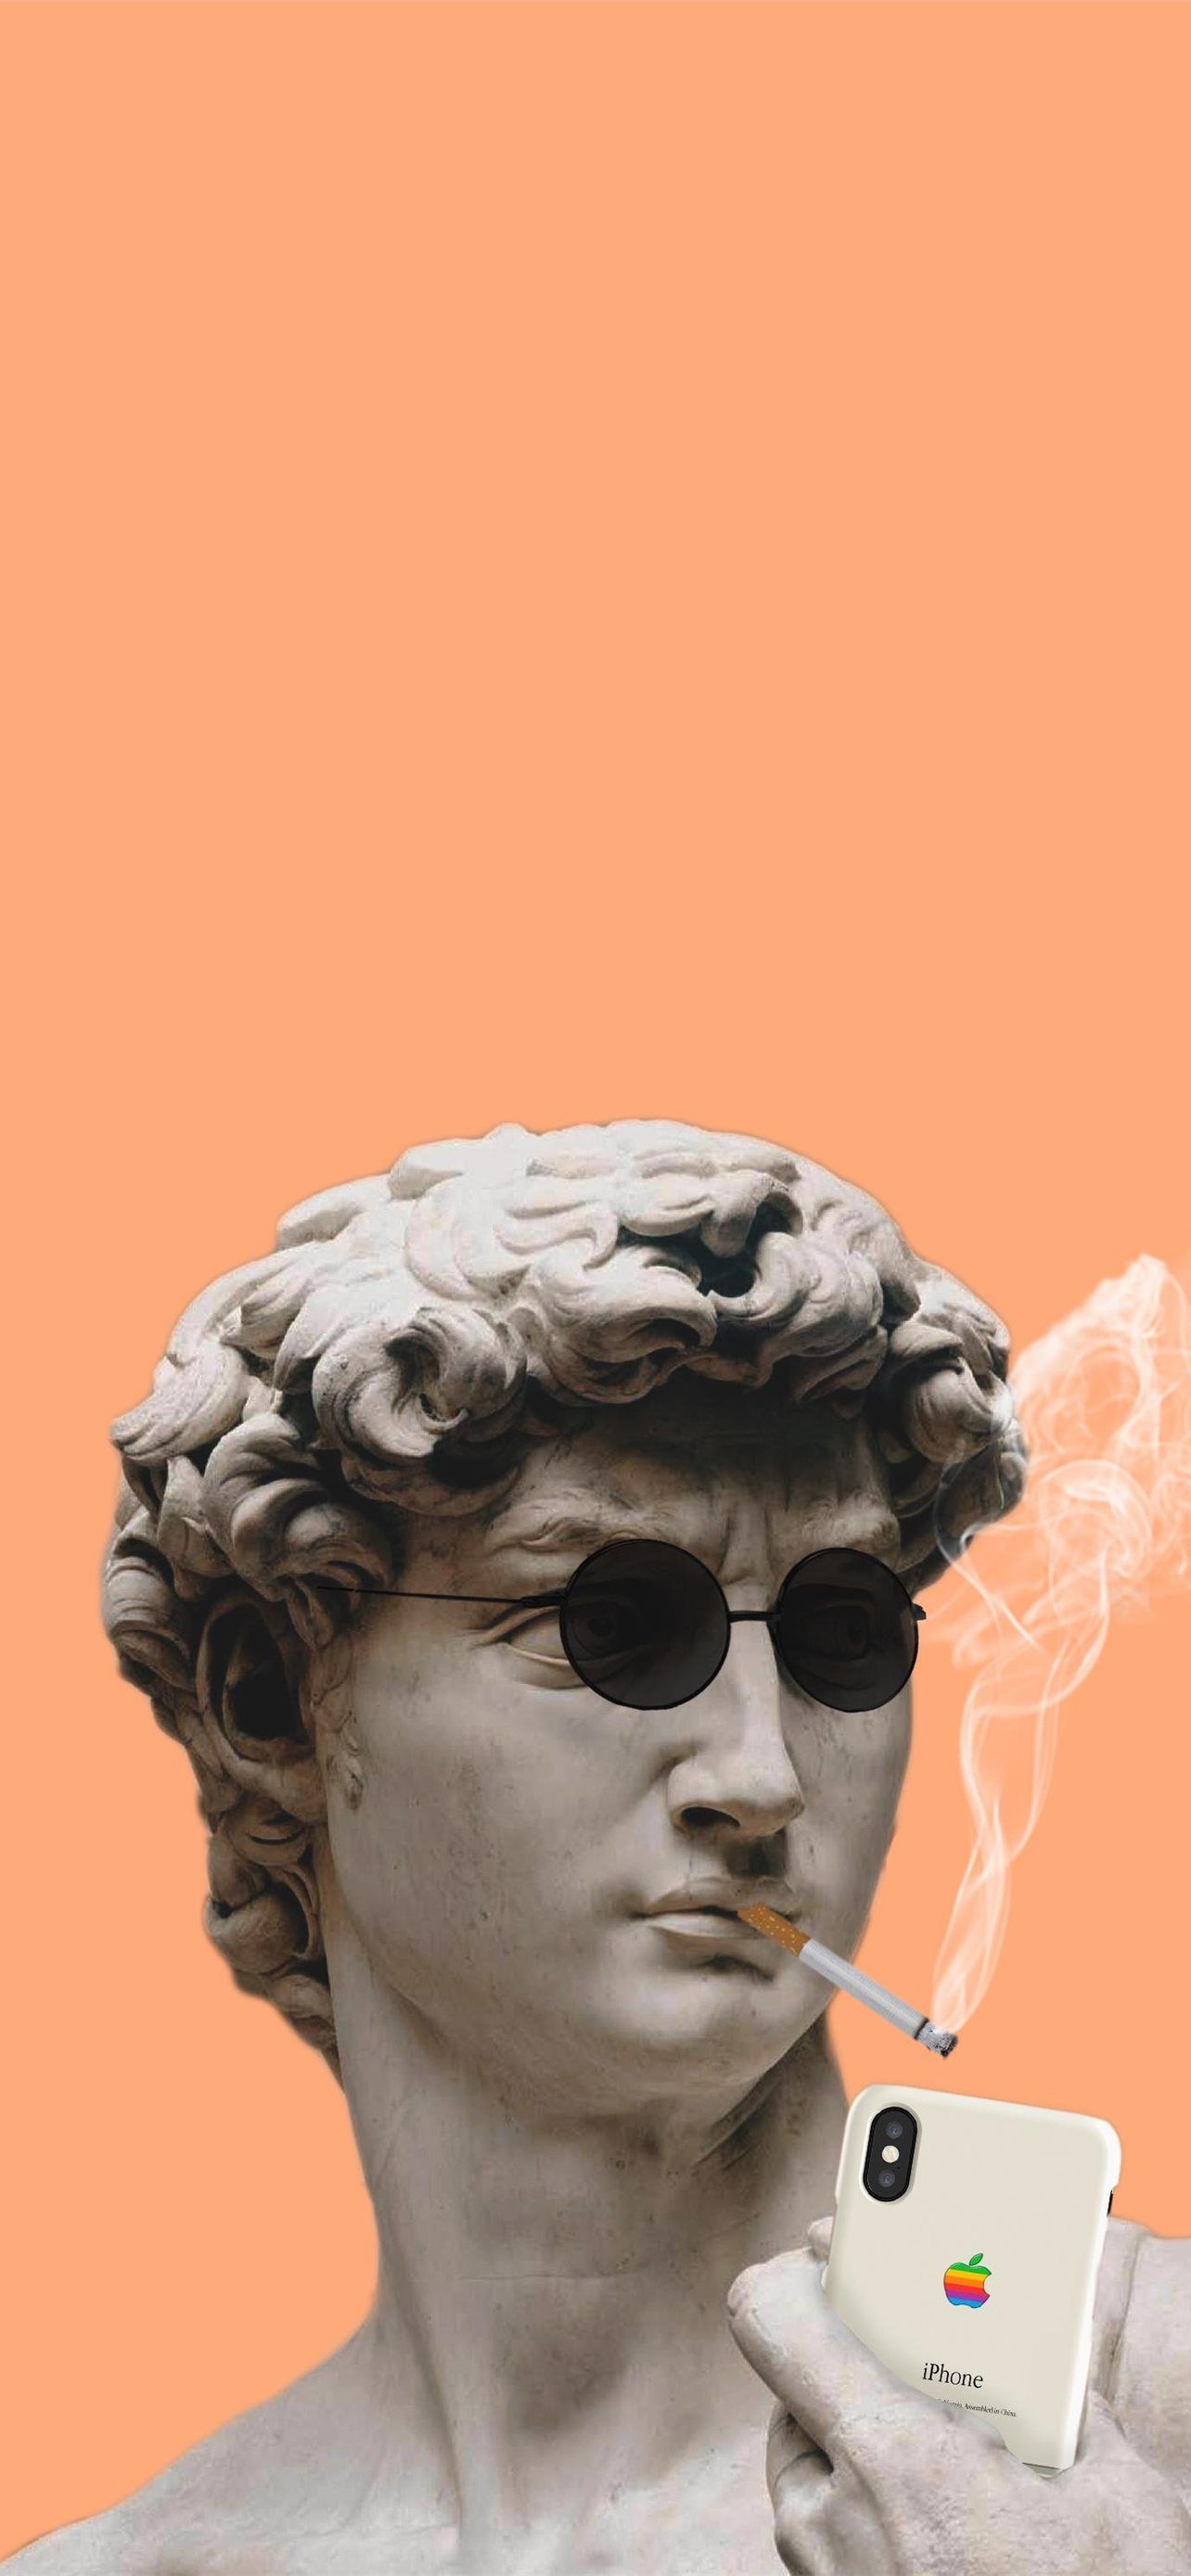 IPhone wallpaper of a statue smoking - Greek statue, statue